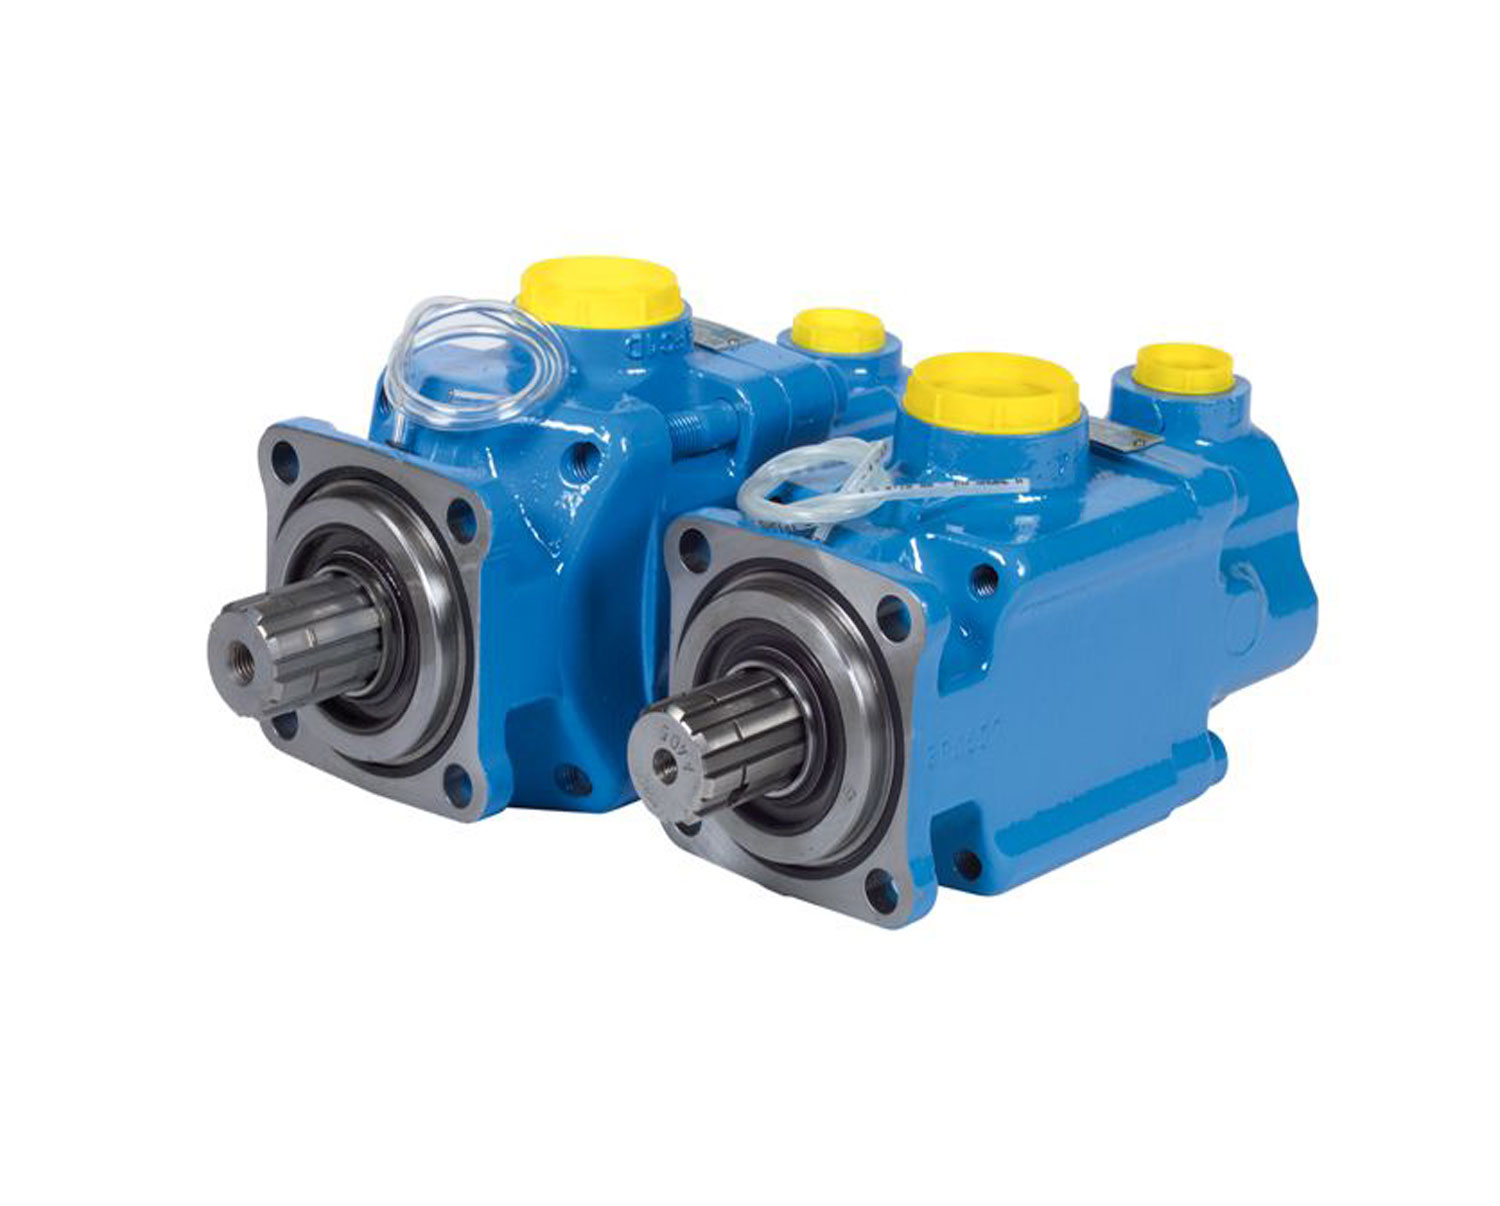 LKW-Hydraulik Konstantpumpen PAC-50-PA-32 Hydro-Leduc, blau